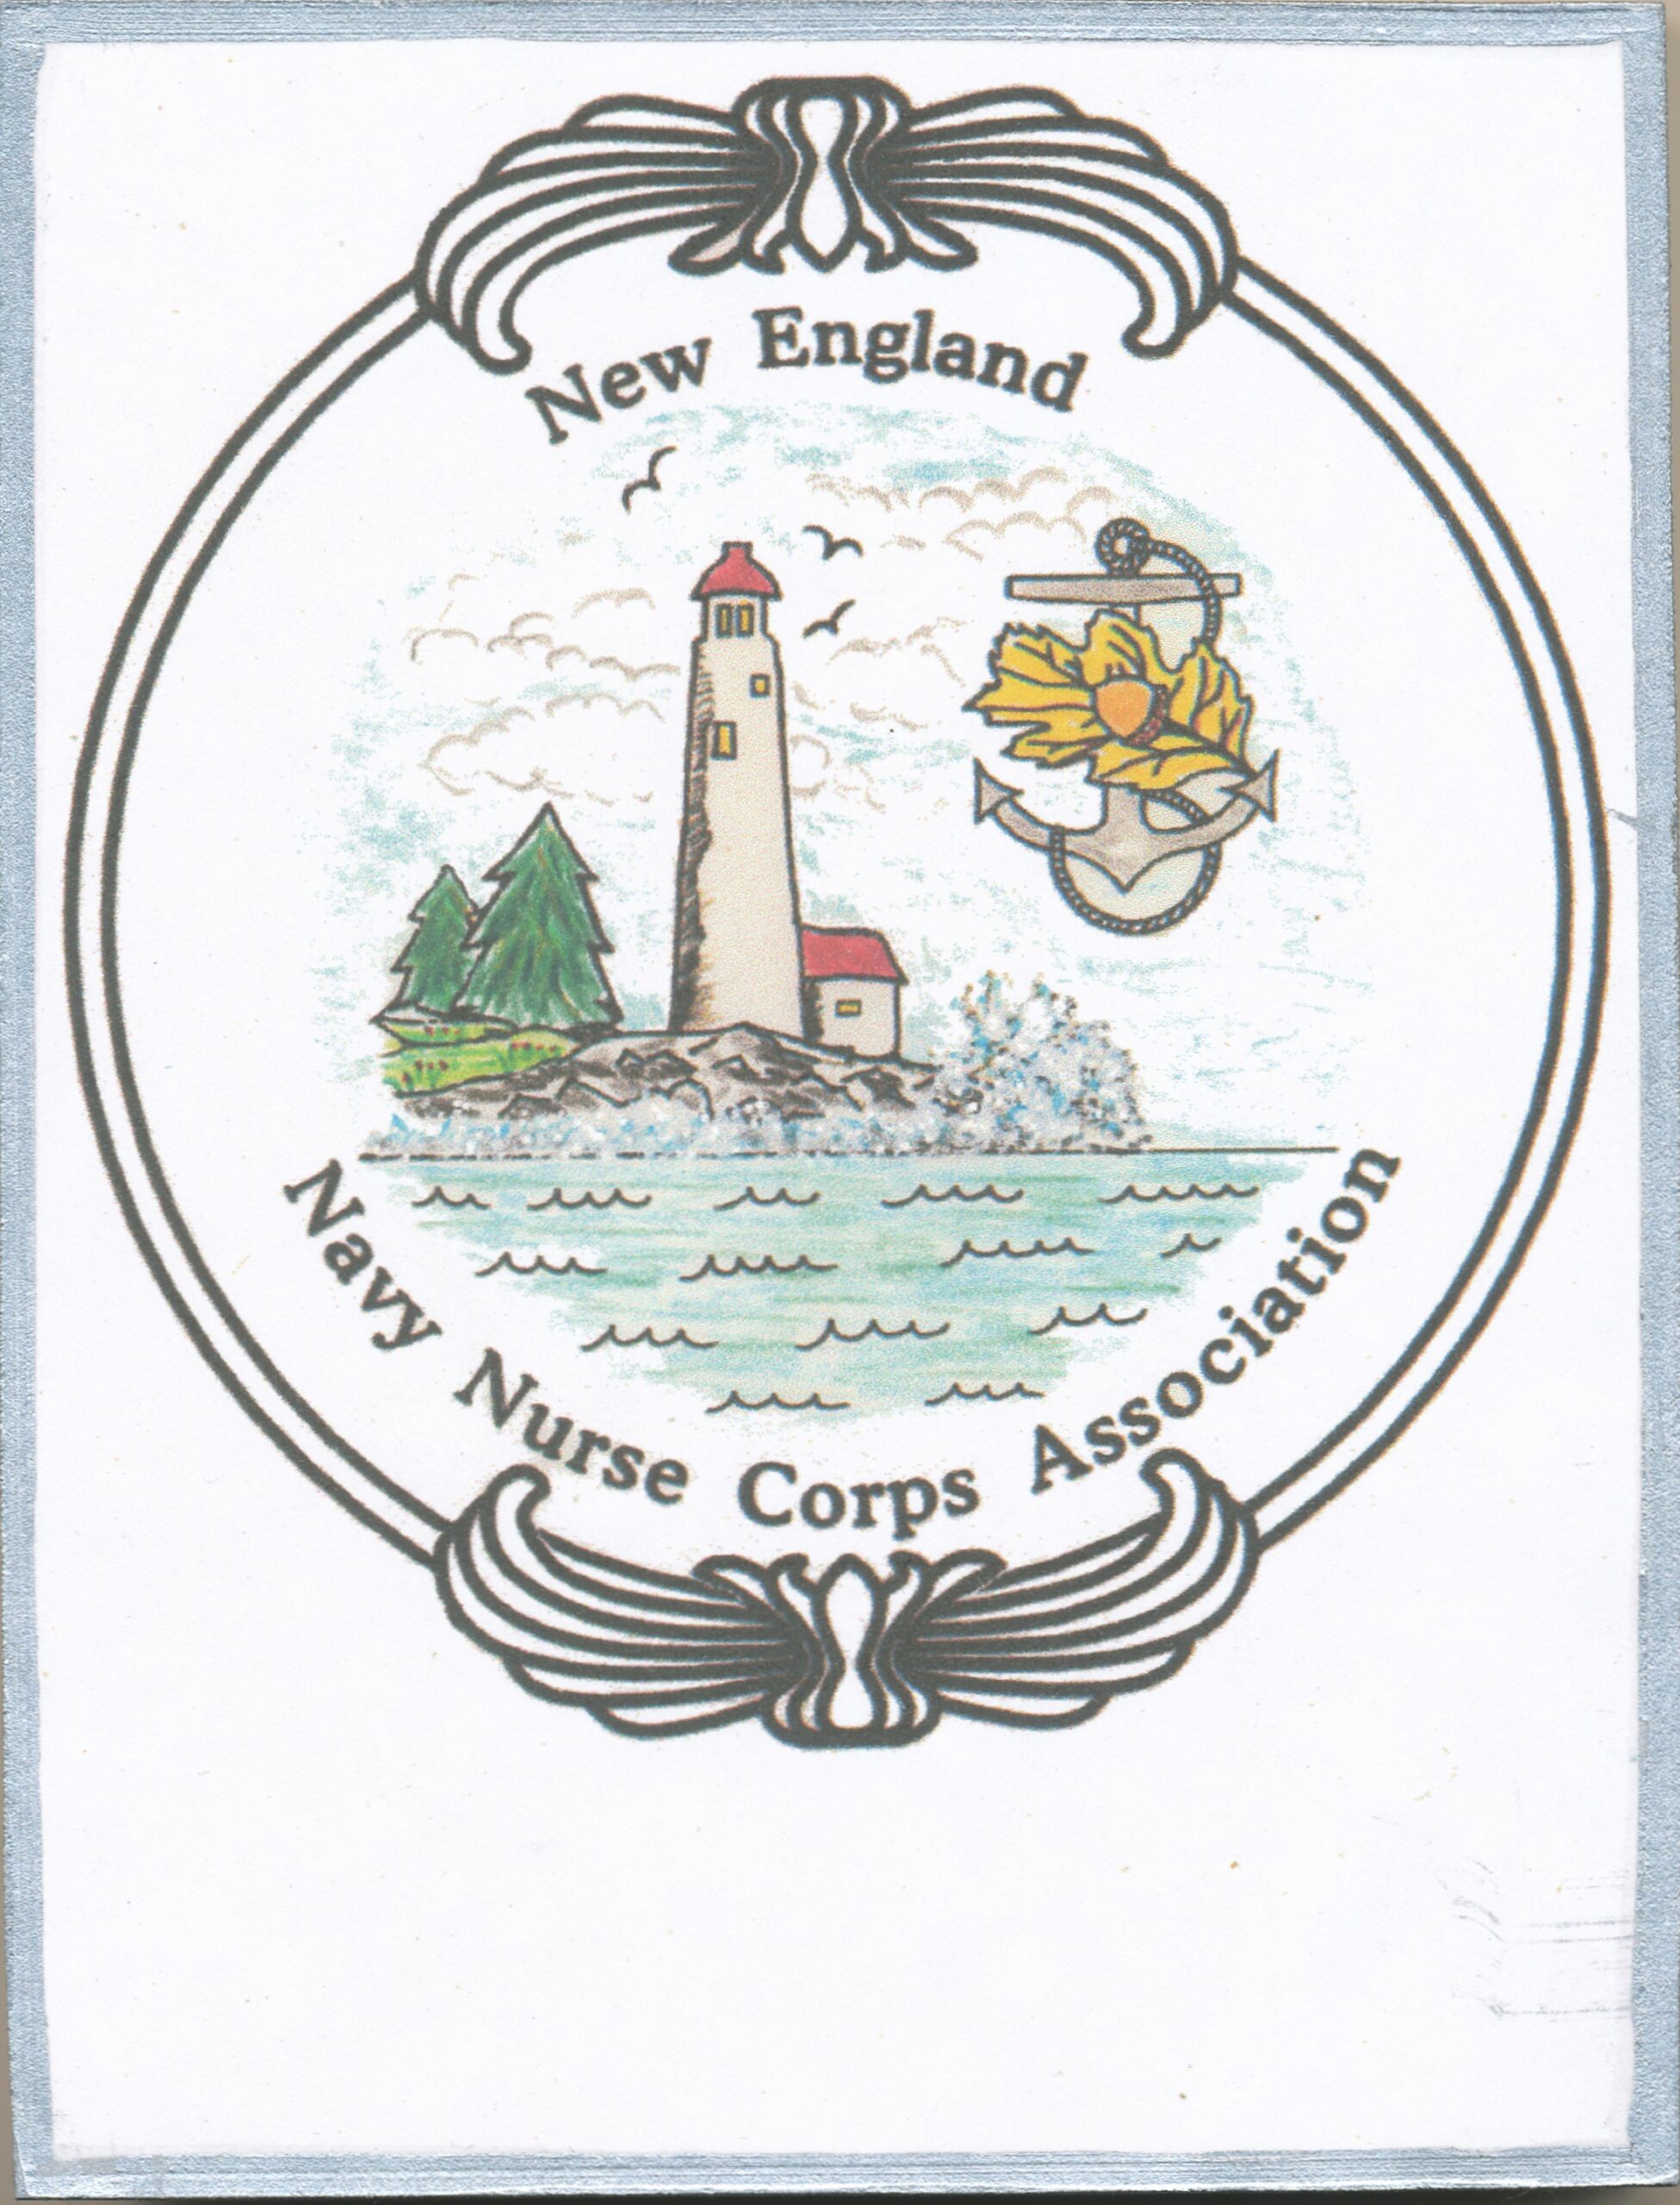 New England Navy Nurse Corps Association